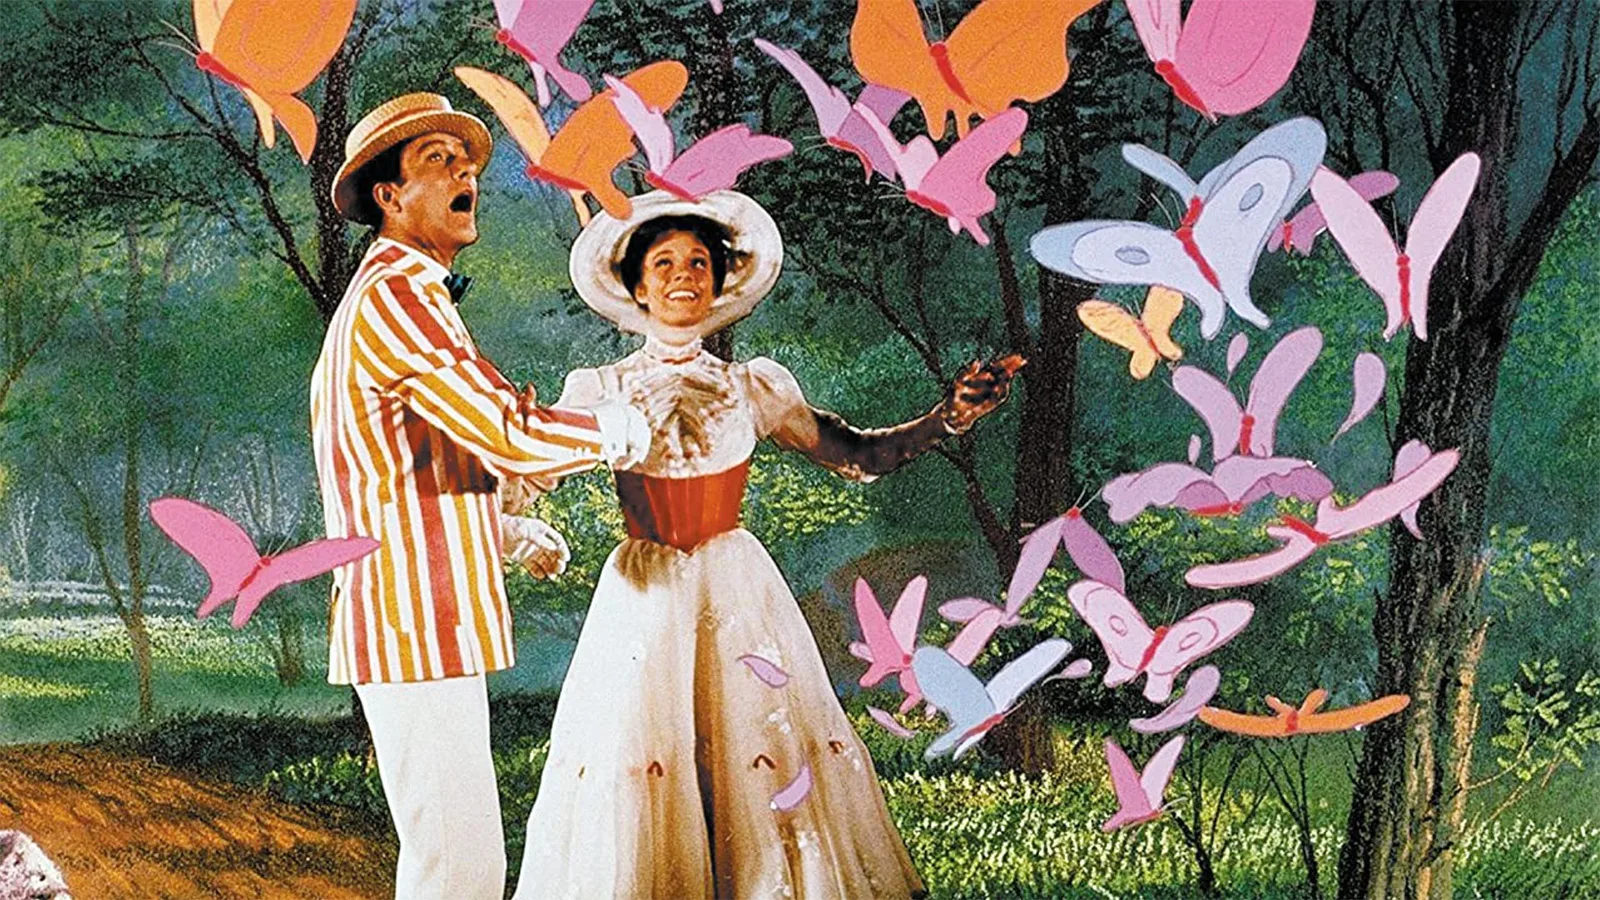 Julie Andrews and Dick Van Dyke singing amongst animated, colorful butterflies